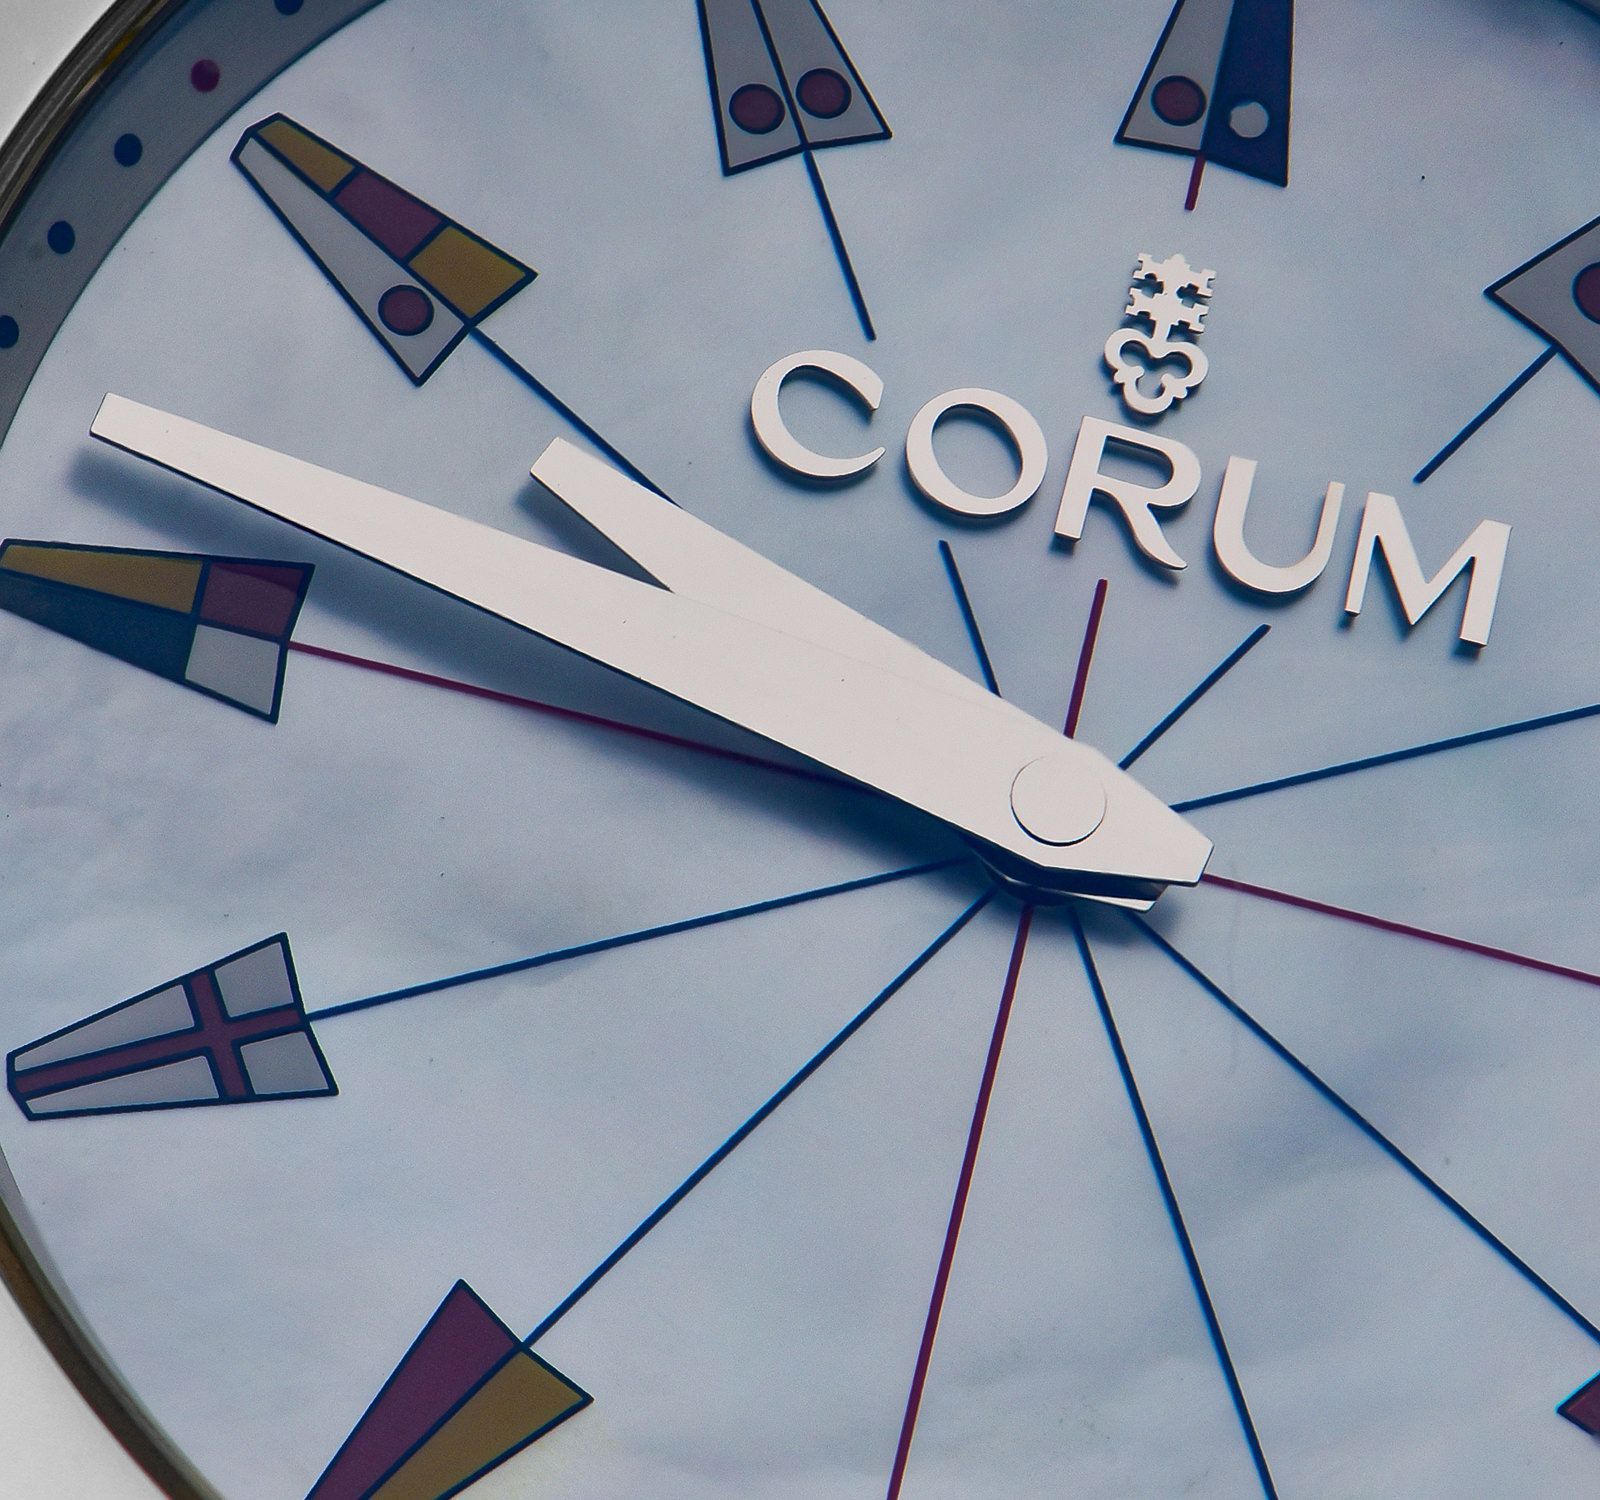 Corum Watch